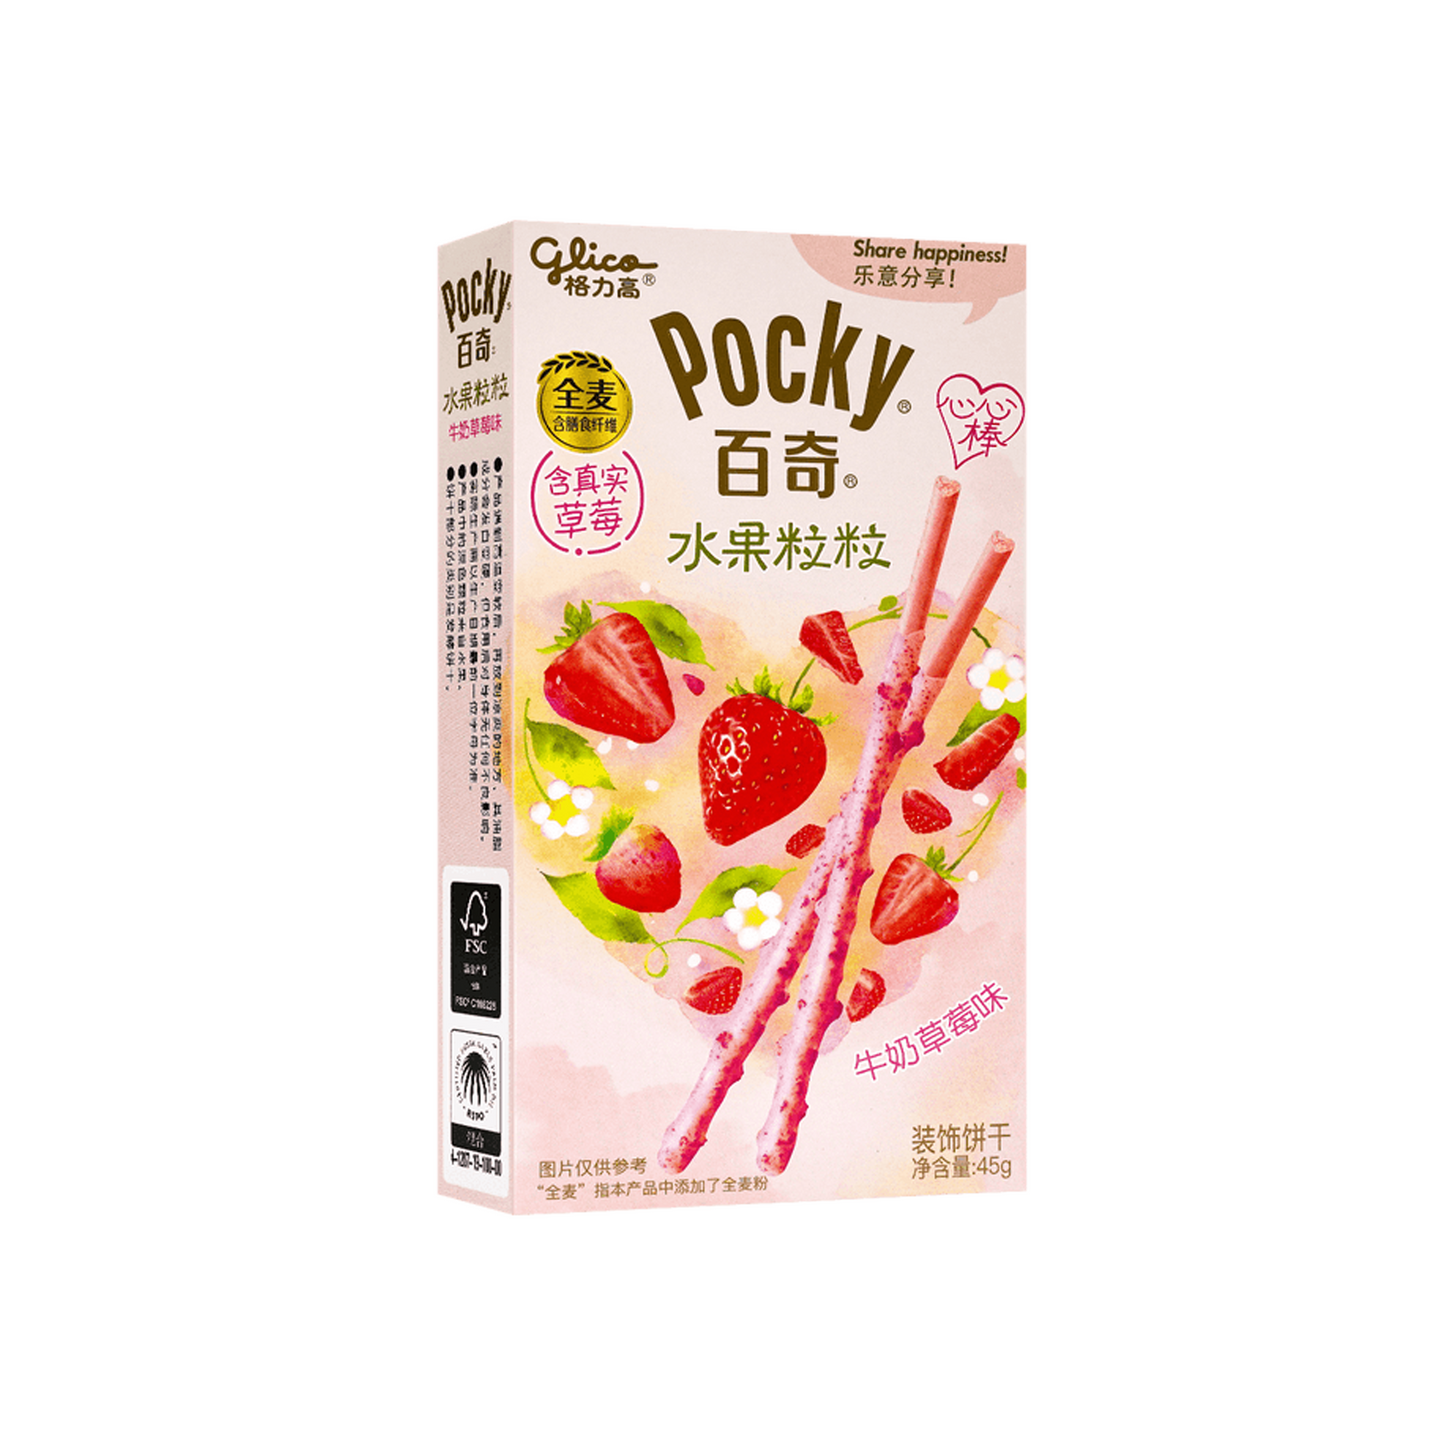 Pocky Milk Strawberry (China)